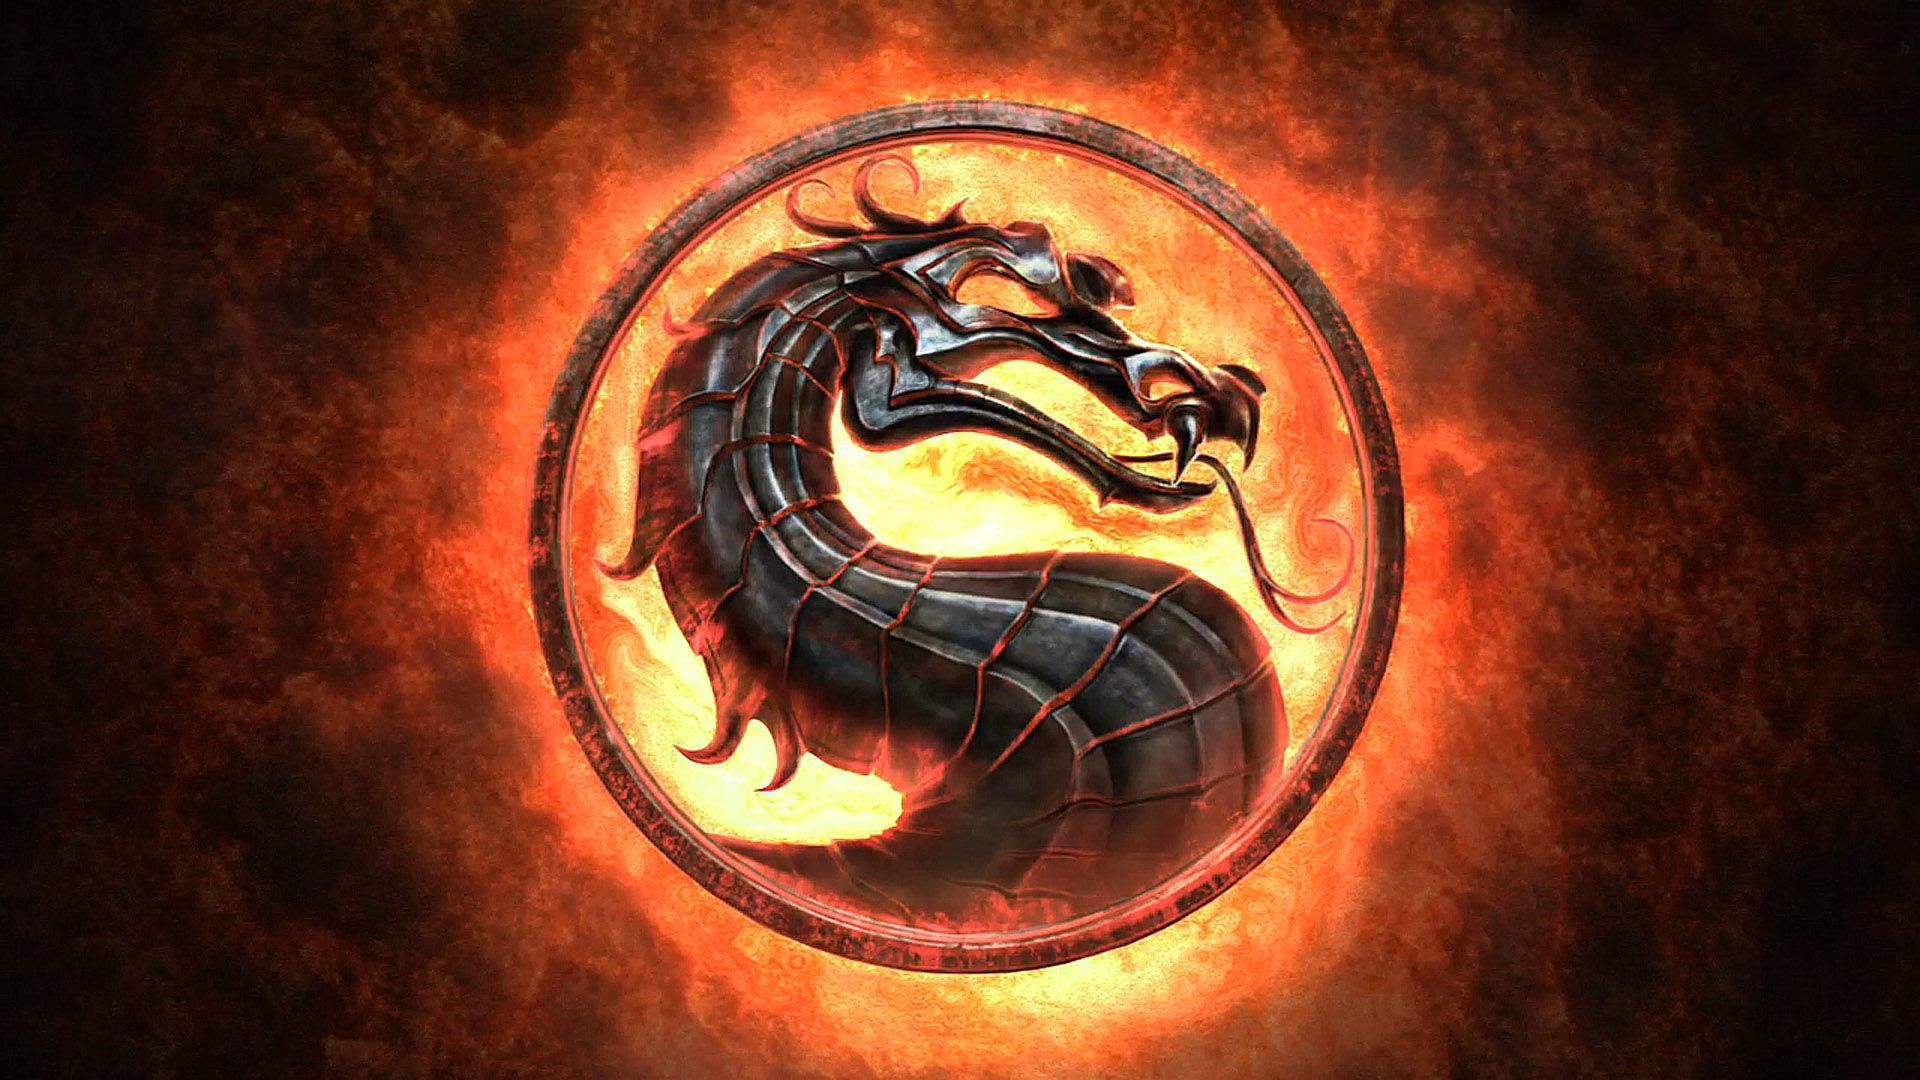 47 Mortal Kombat X HD Wallpapers | Backgrounds - Wallpaper Abyss